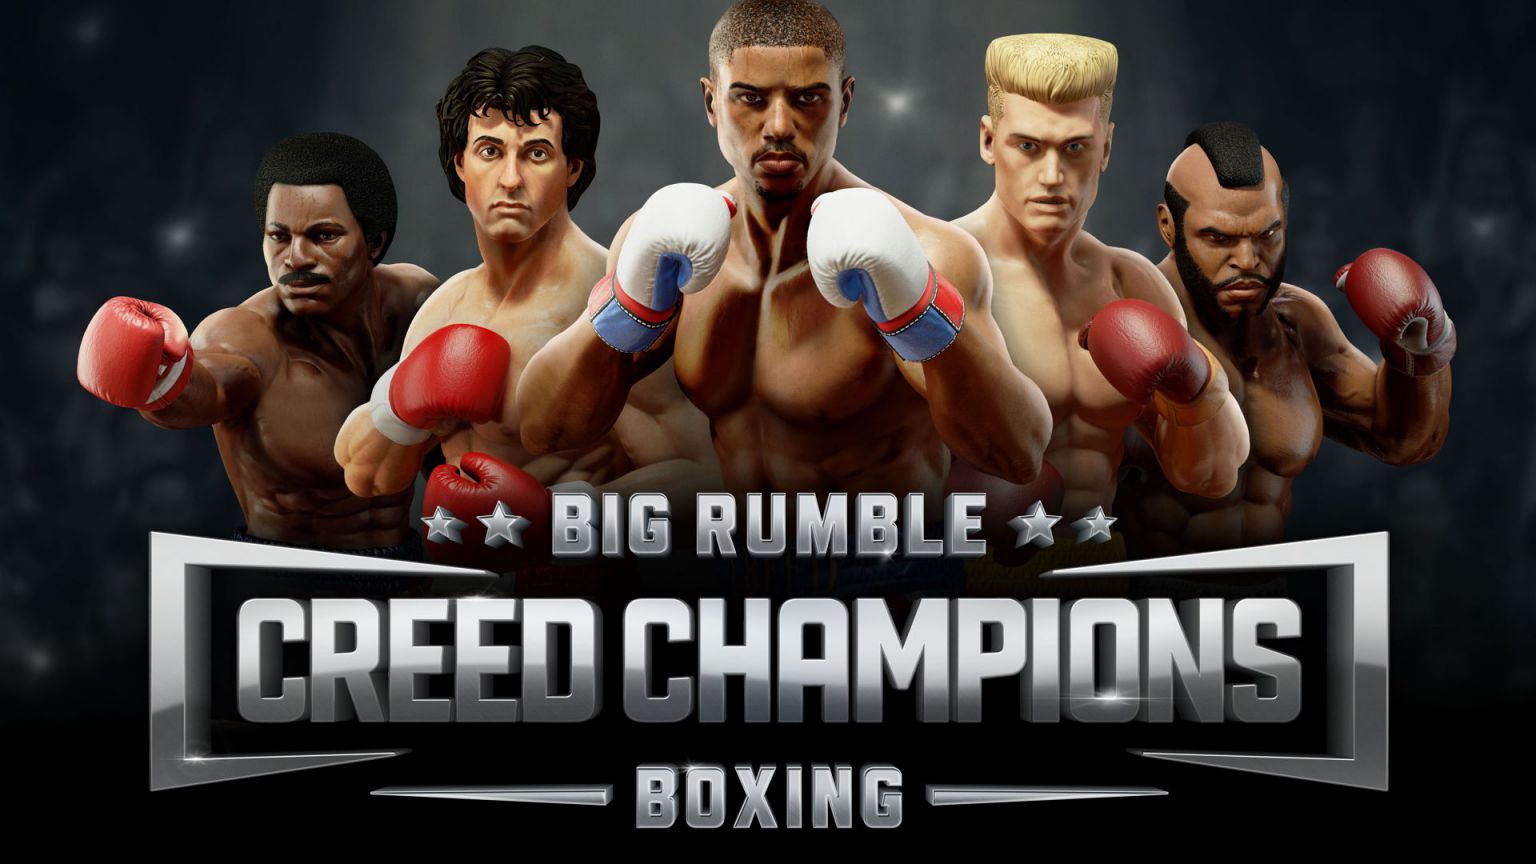 big rumble boxing creed champions - generacion xbox